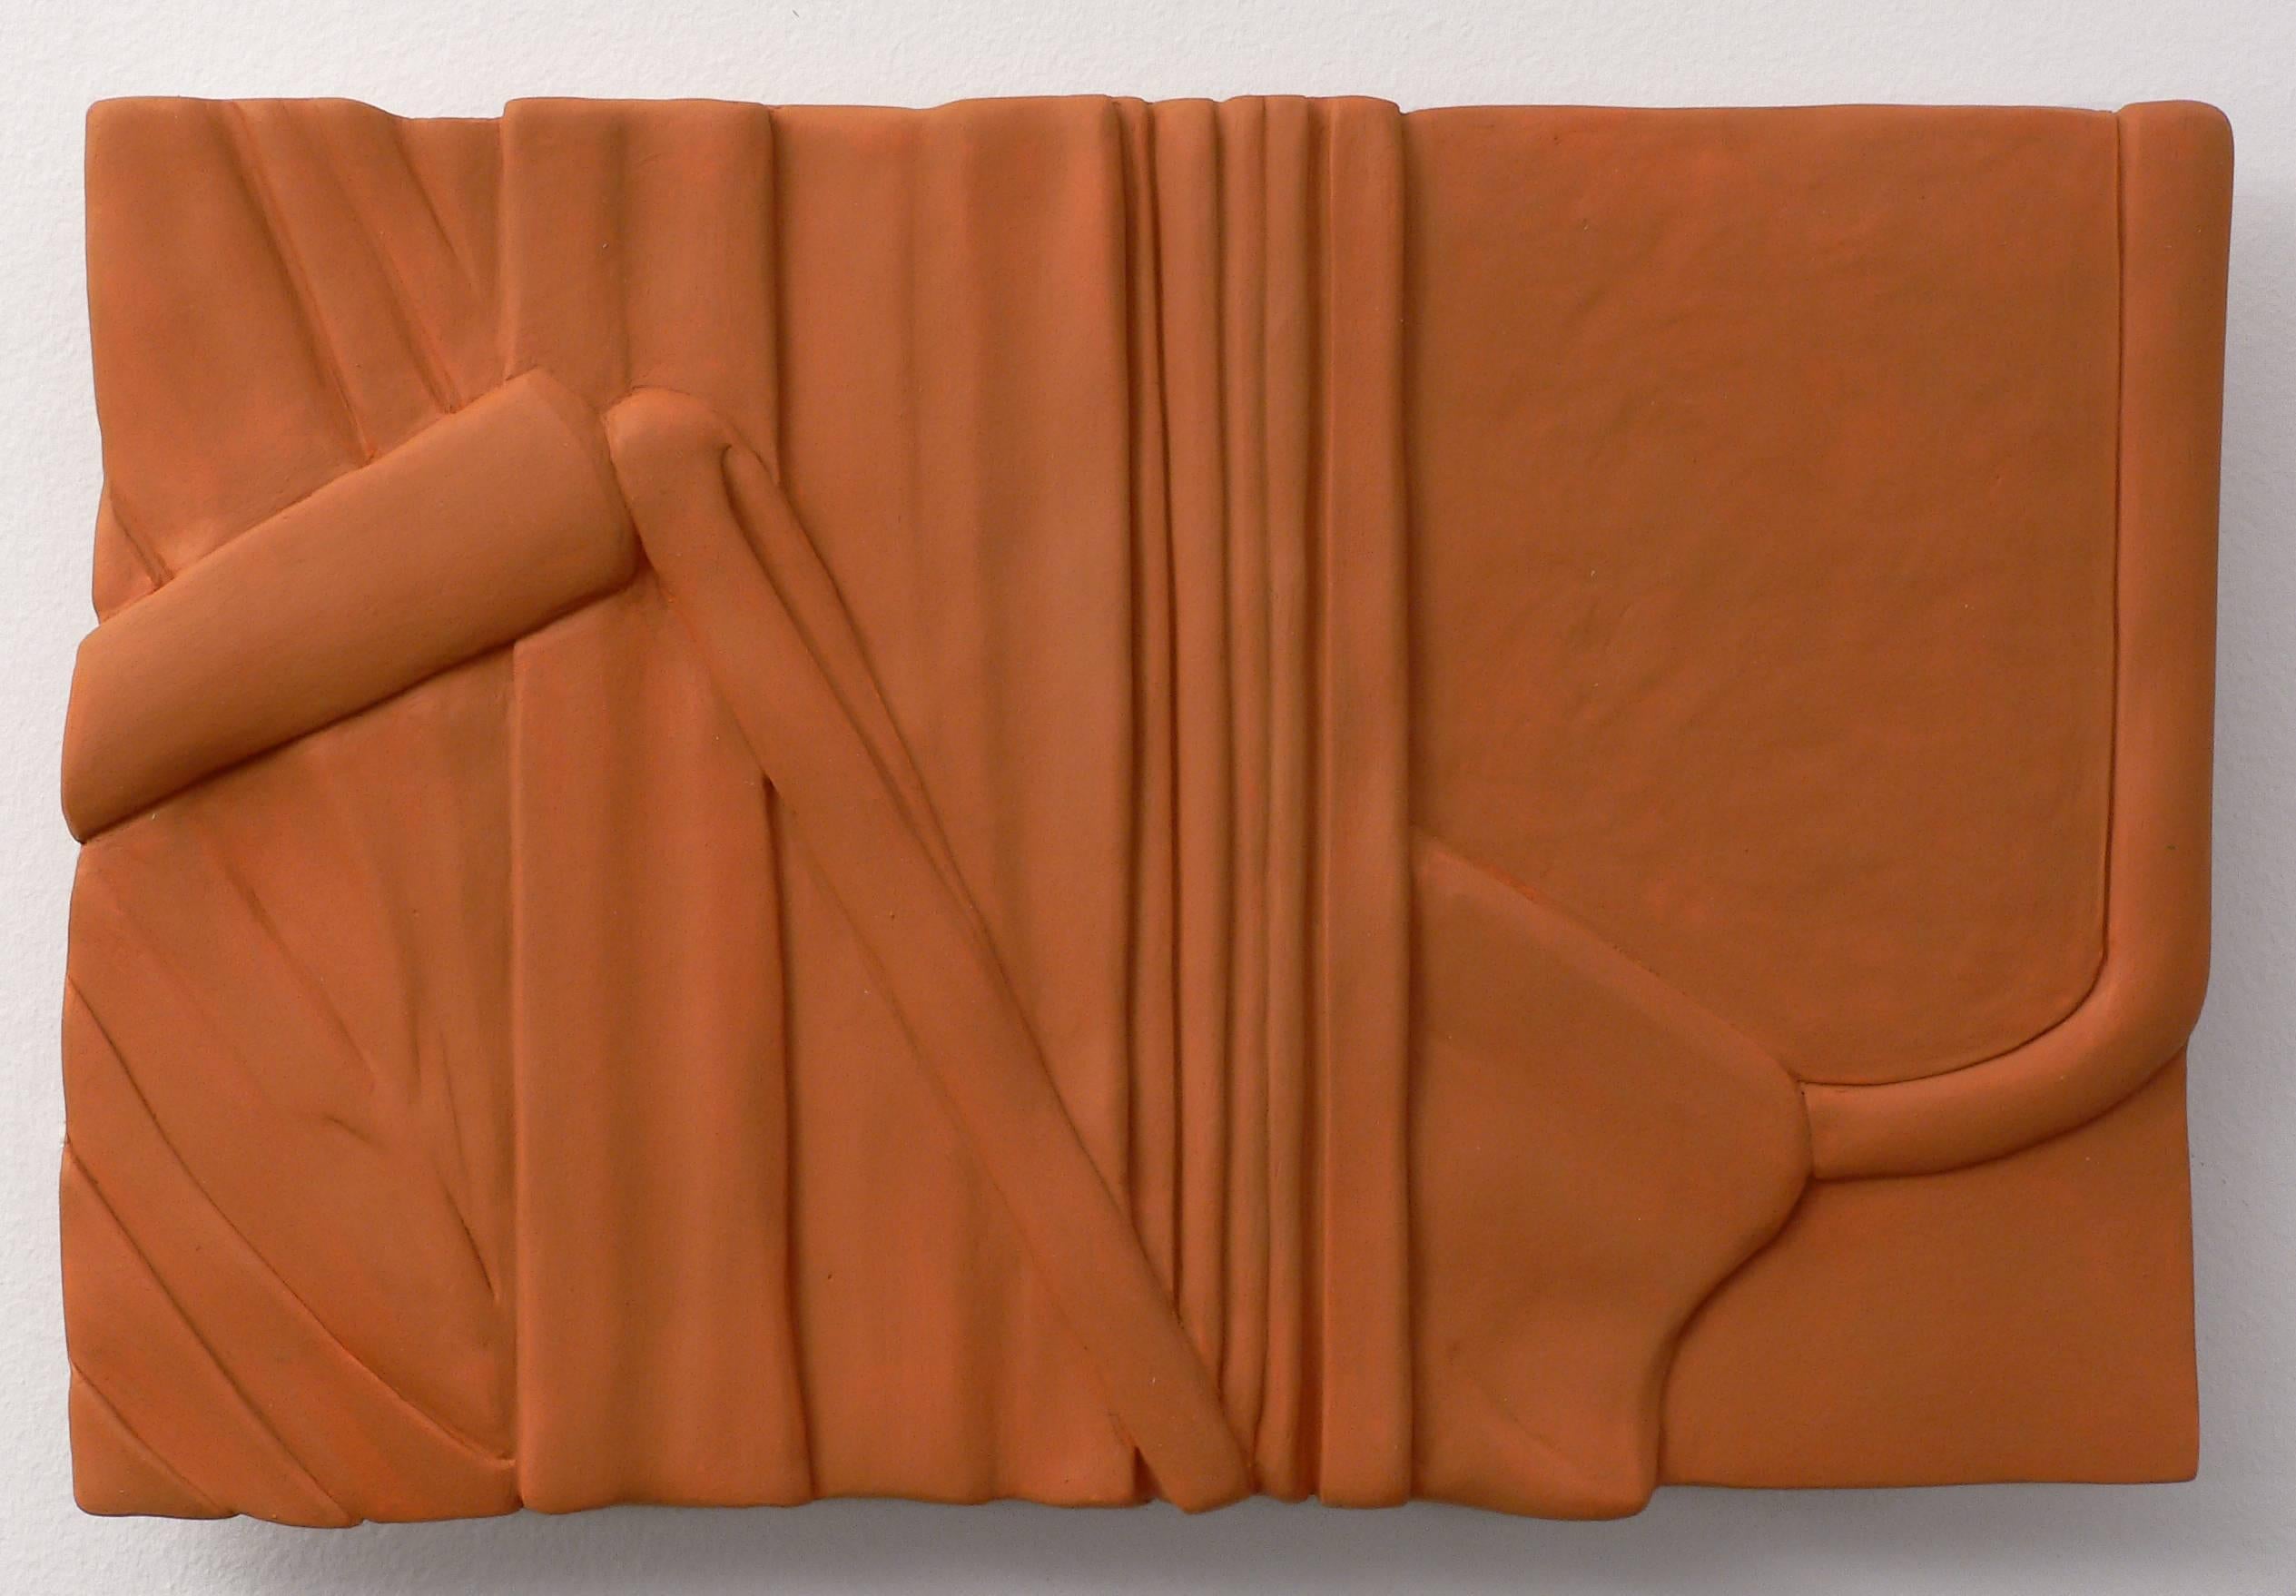 Altoon Sultan Abstract Sculpture - Vertical Folds